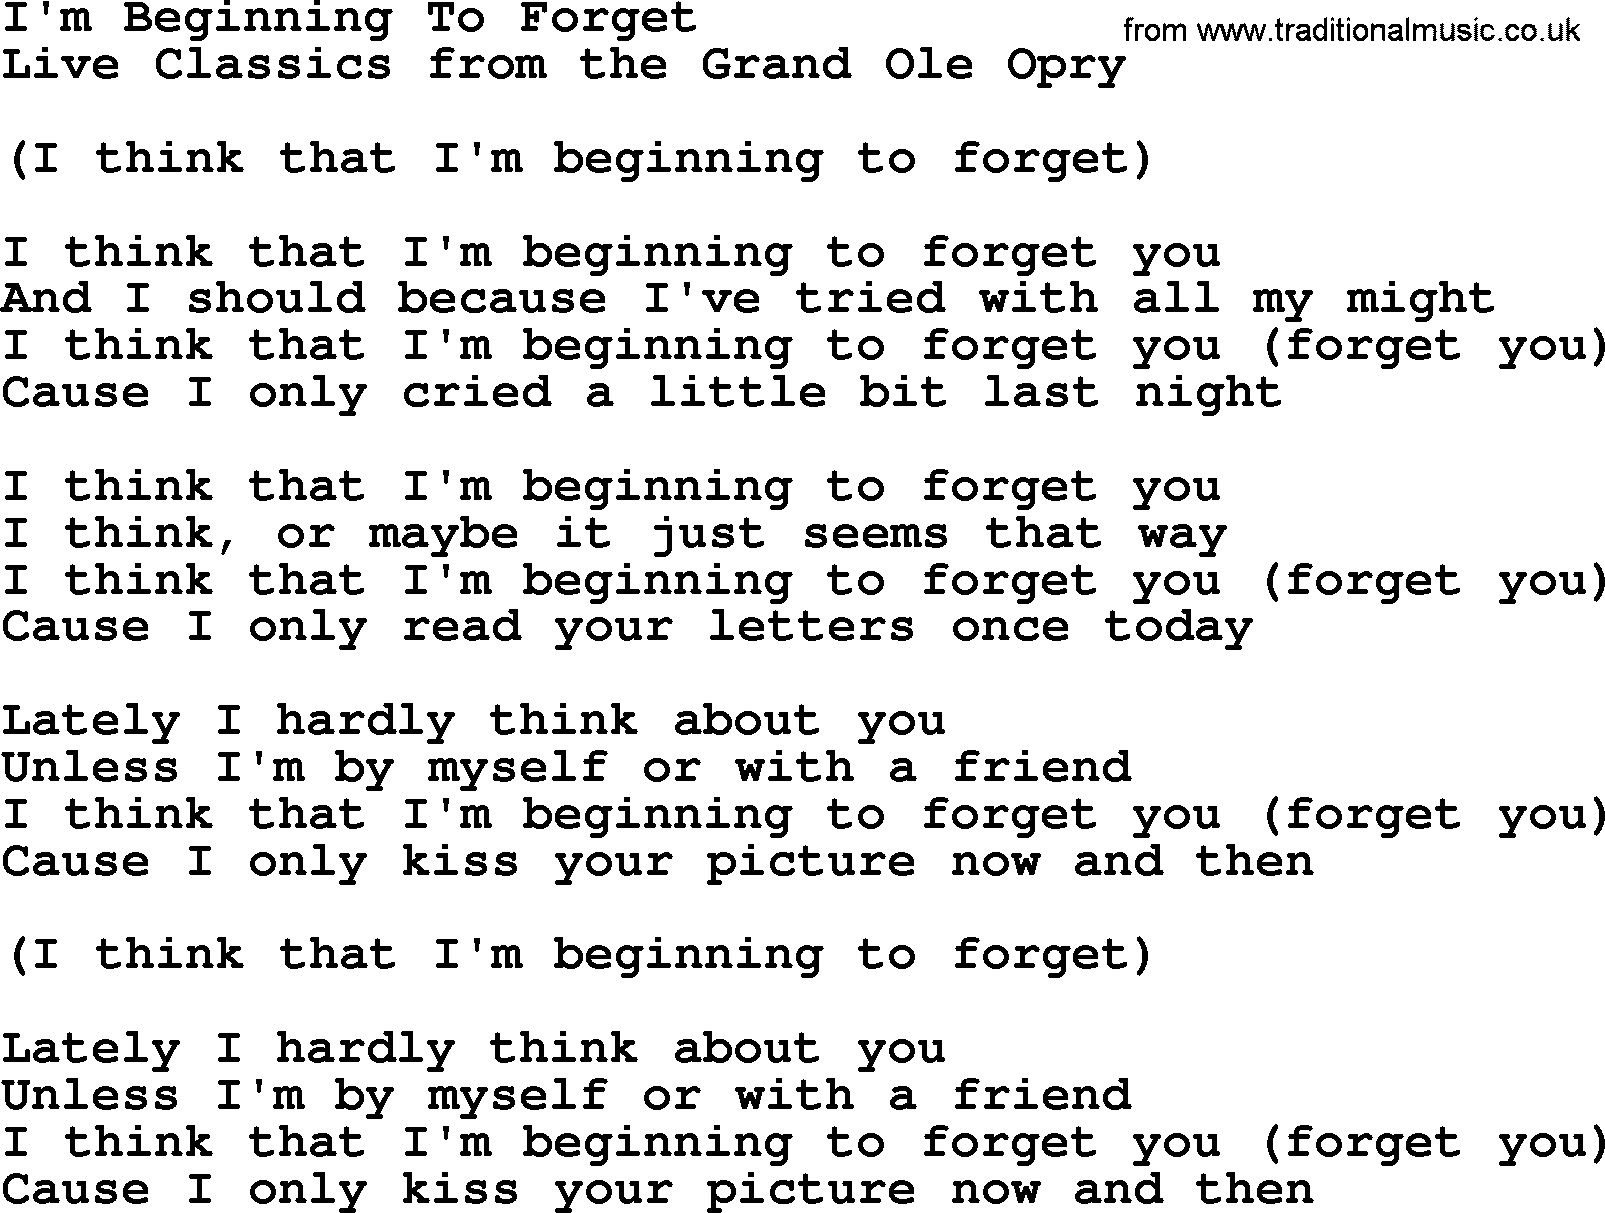 Marty Robbins song: I'm Beginning To Forget, lyrics